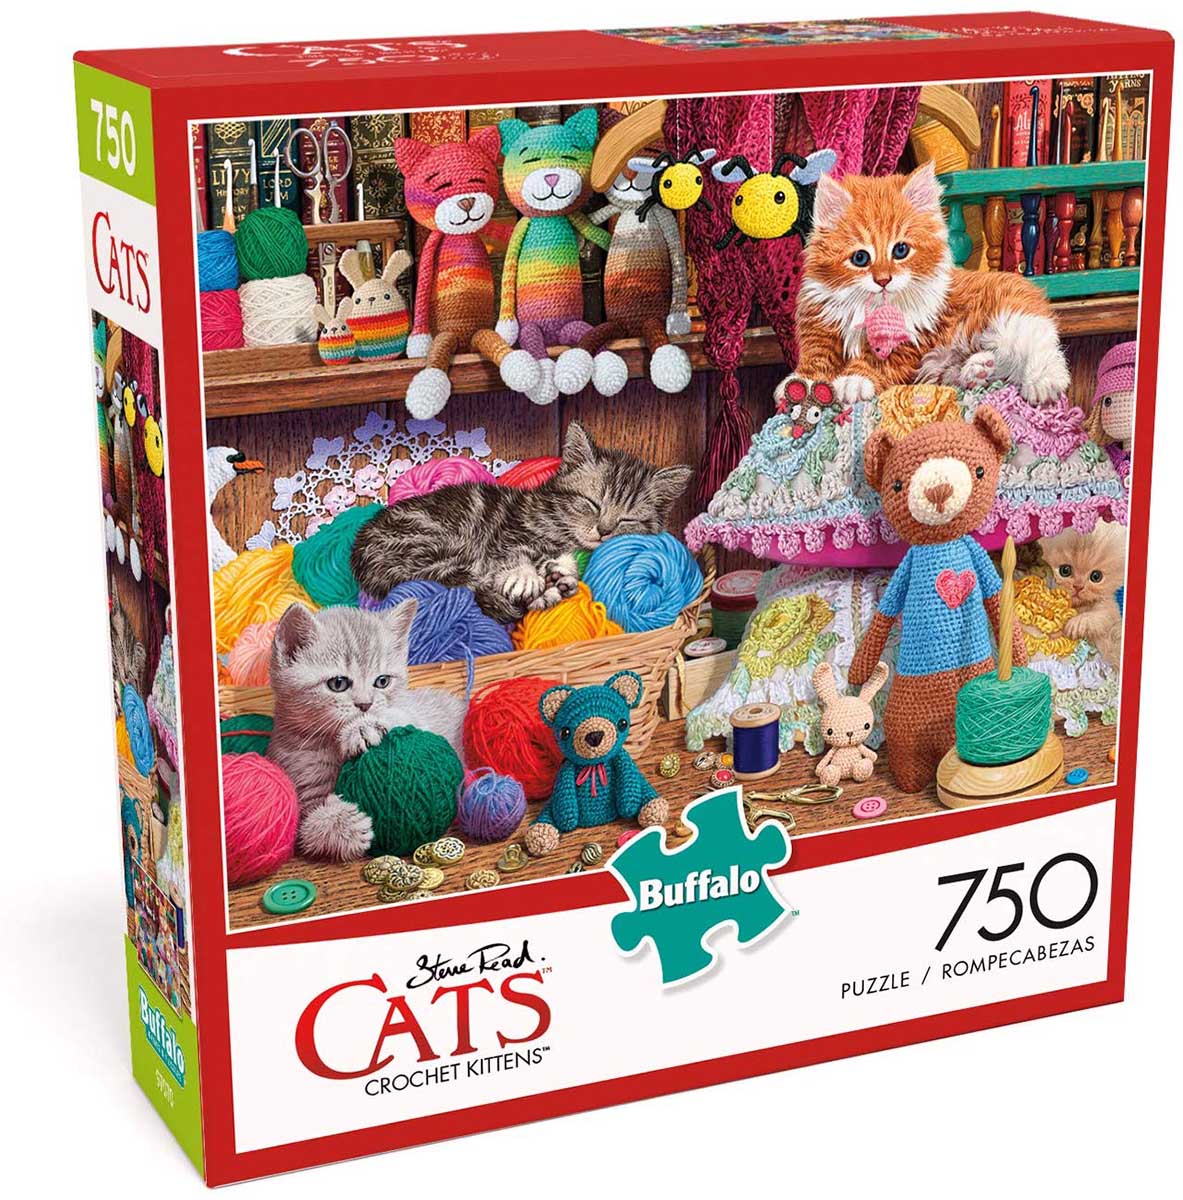 Buffalo Games Cats 750 Piece Jigsaw Puzzle Crochet Kittens 24x18 for sale online 